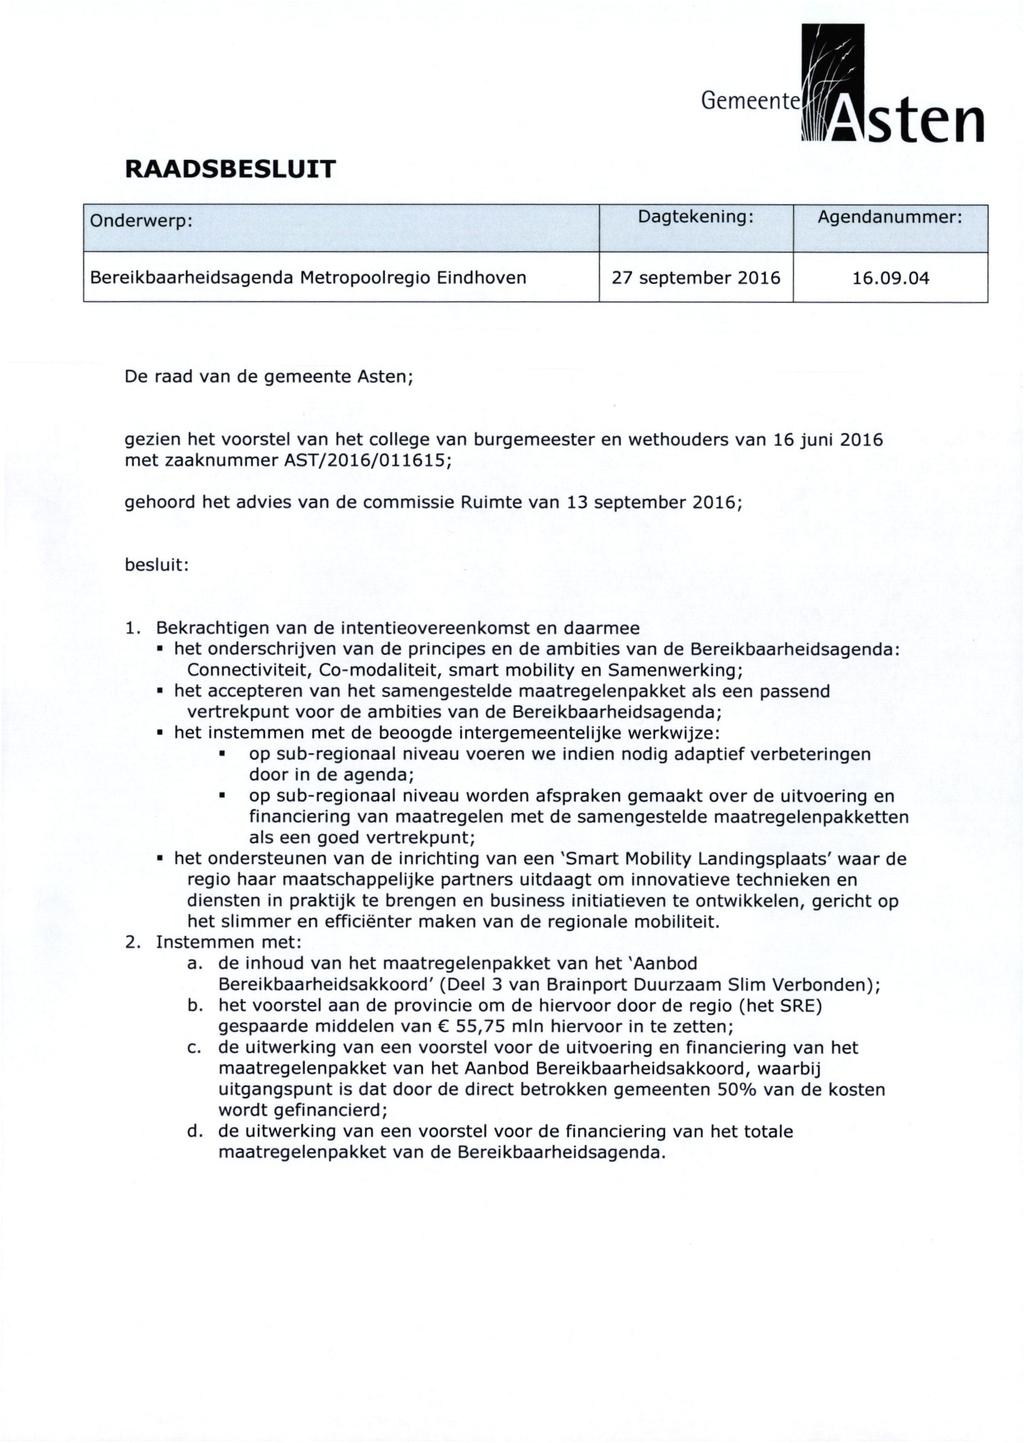 RAADSBESLUIT Gemeente sklsten Onderwerp: Dagtekening: Agendanummer: Bereikbaarheidsagenda Metropoolregio Eindhoven 27 september 2016 16.09.